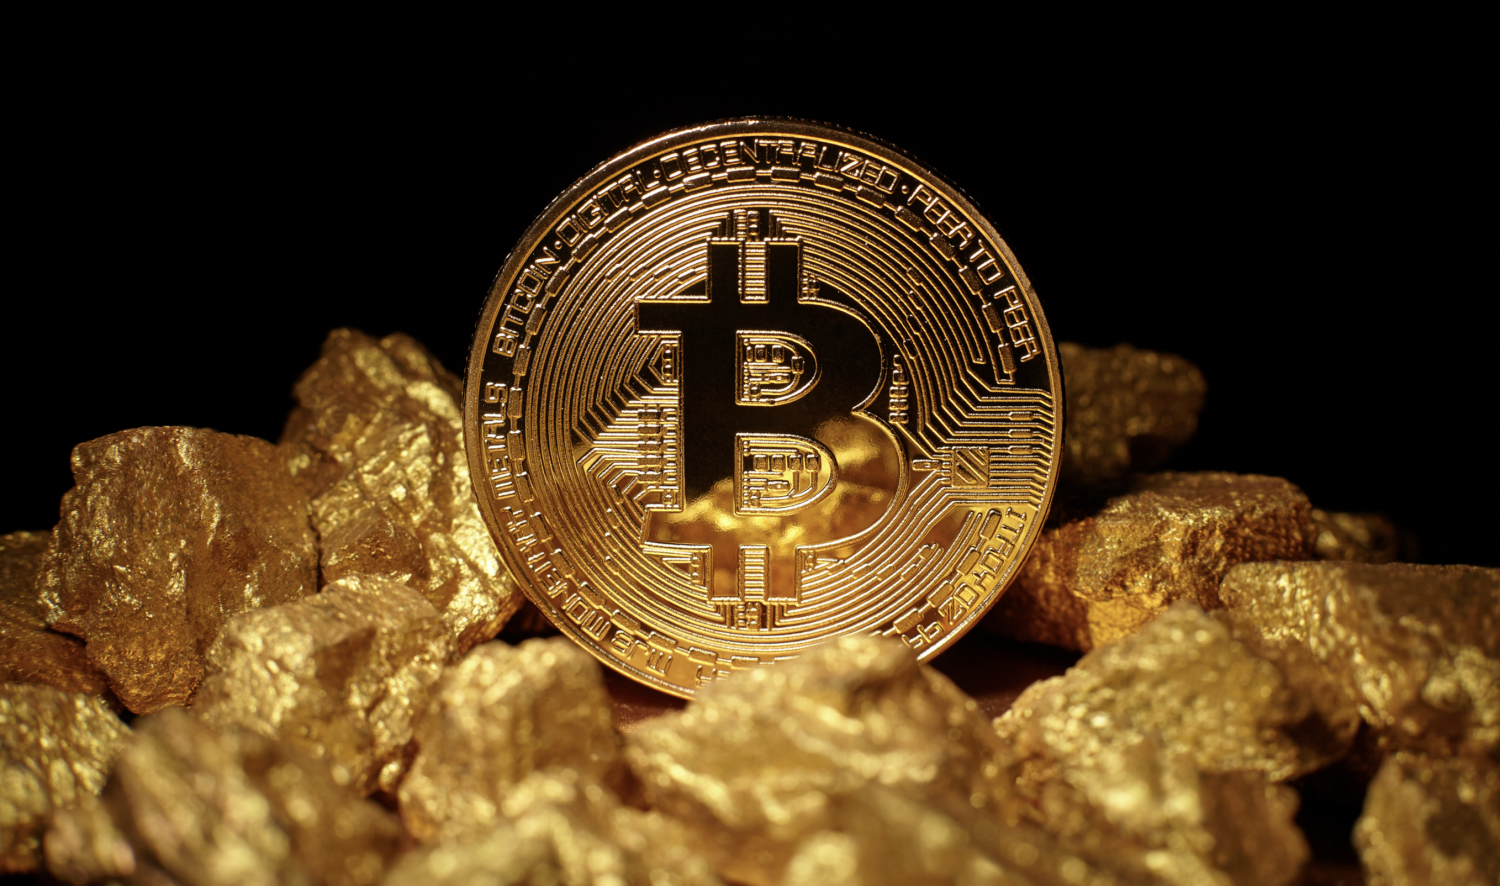 Bitcoin outperforms Gold in 2023 so far - bullish reversal, or dead cat bounce?